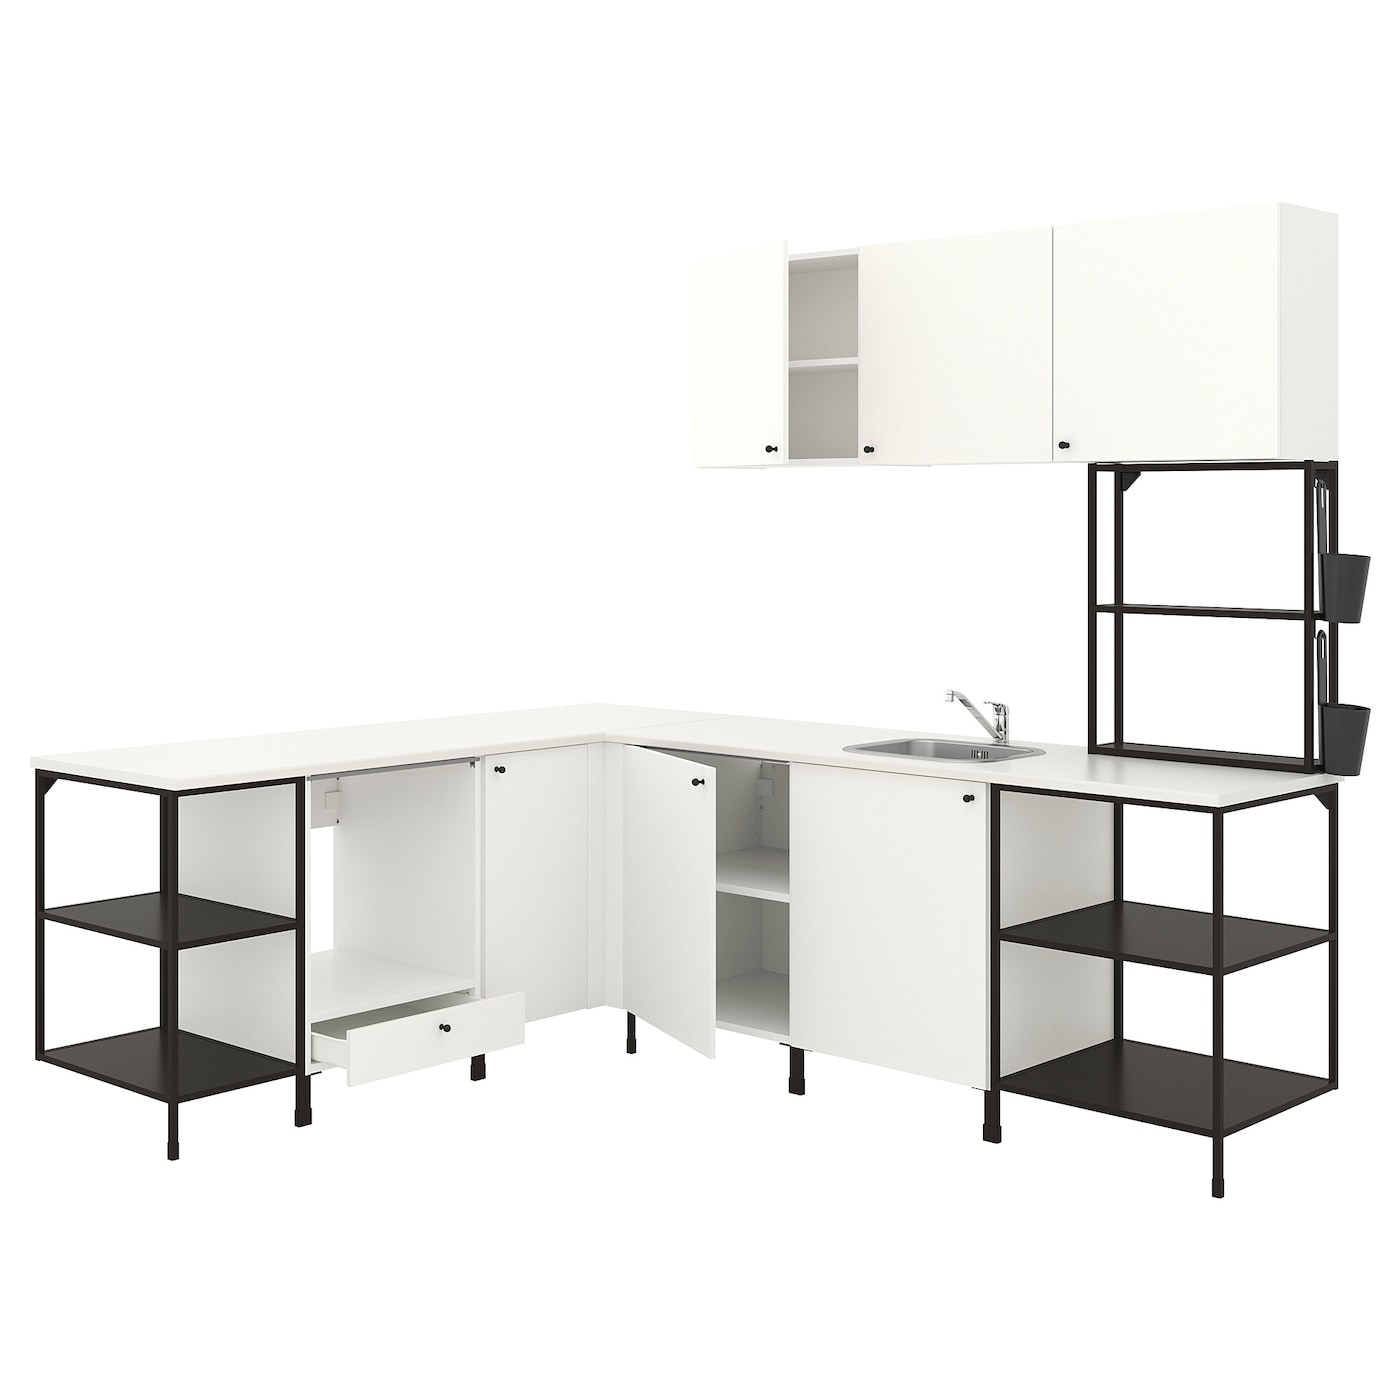 Угловая кухня -  ENHET  IKEA/ ЭНХЕТ ИКЕА, 248.5х135 см, белый/черный